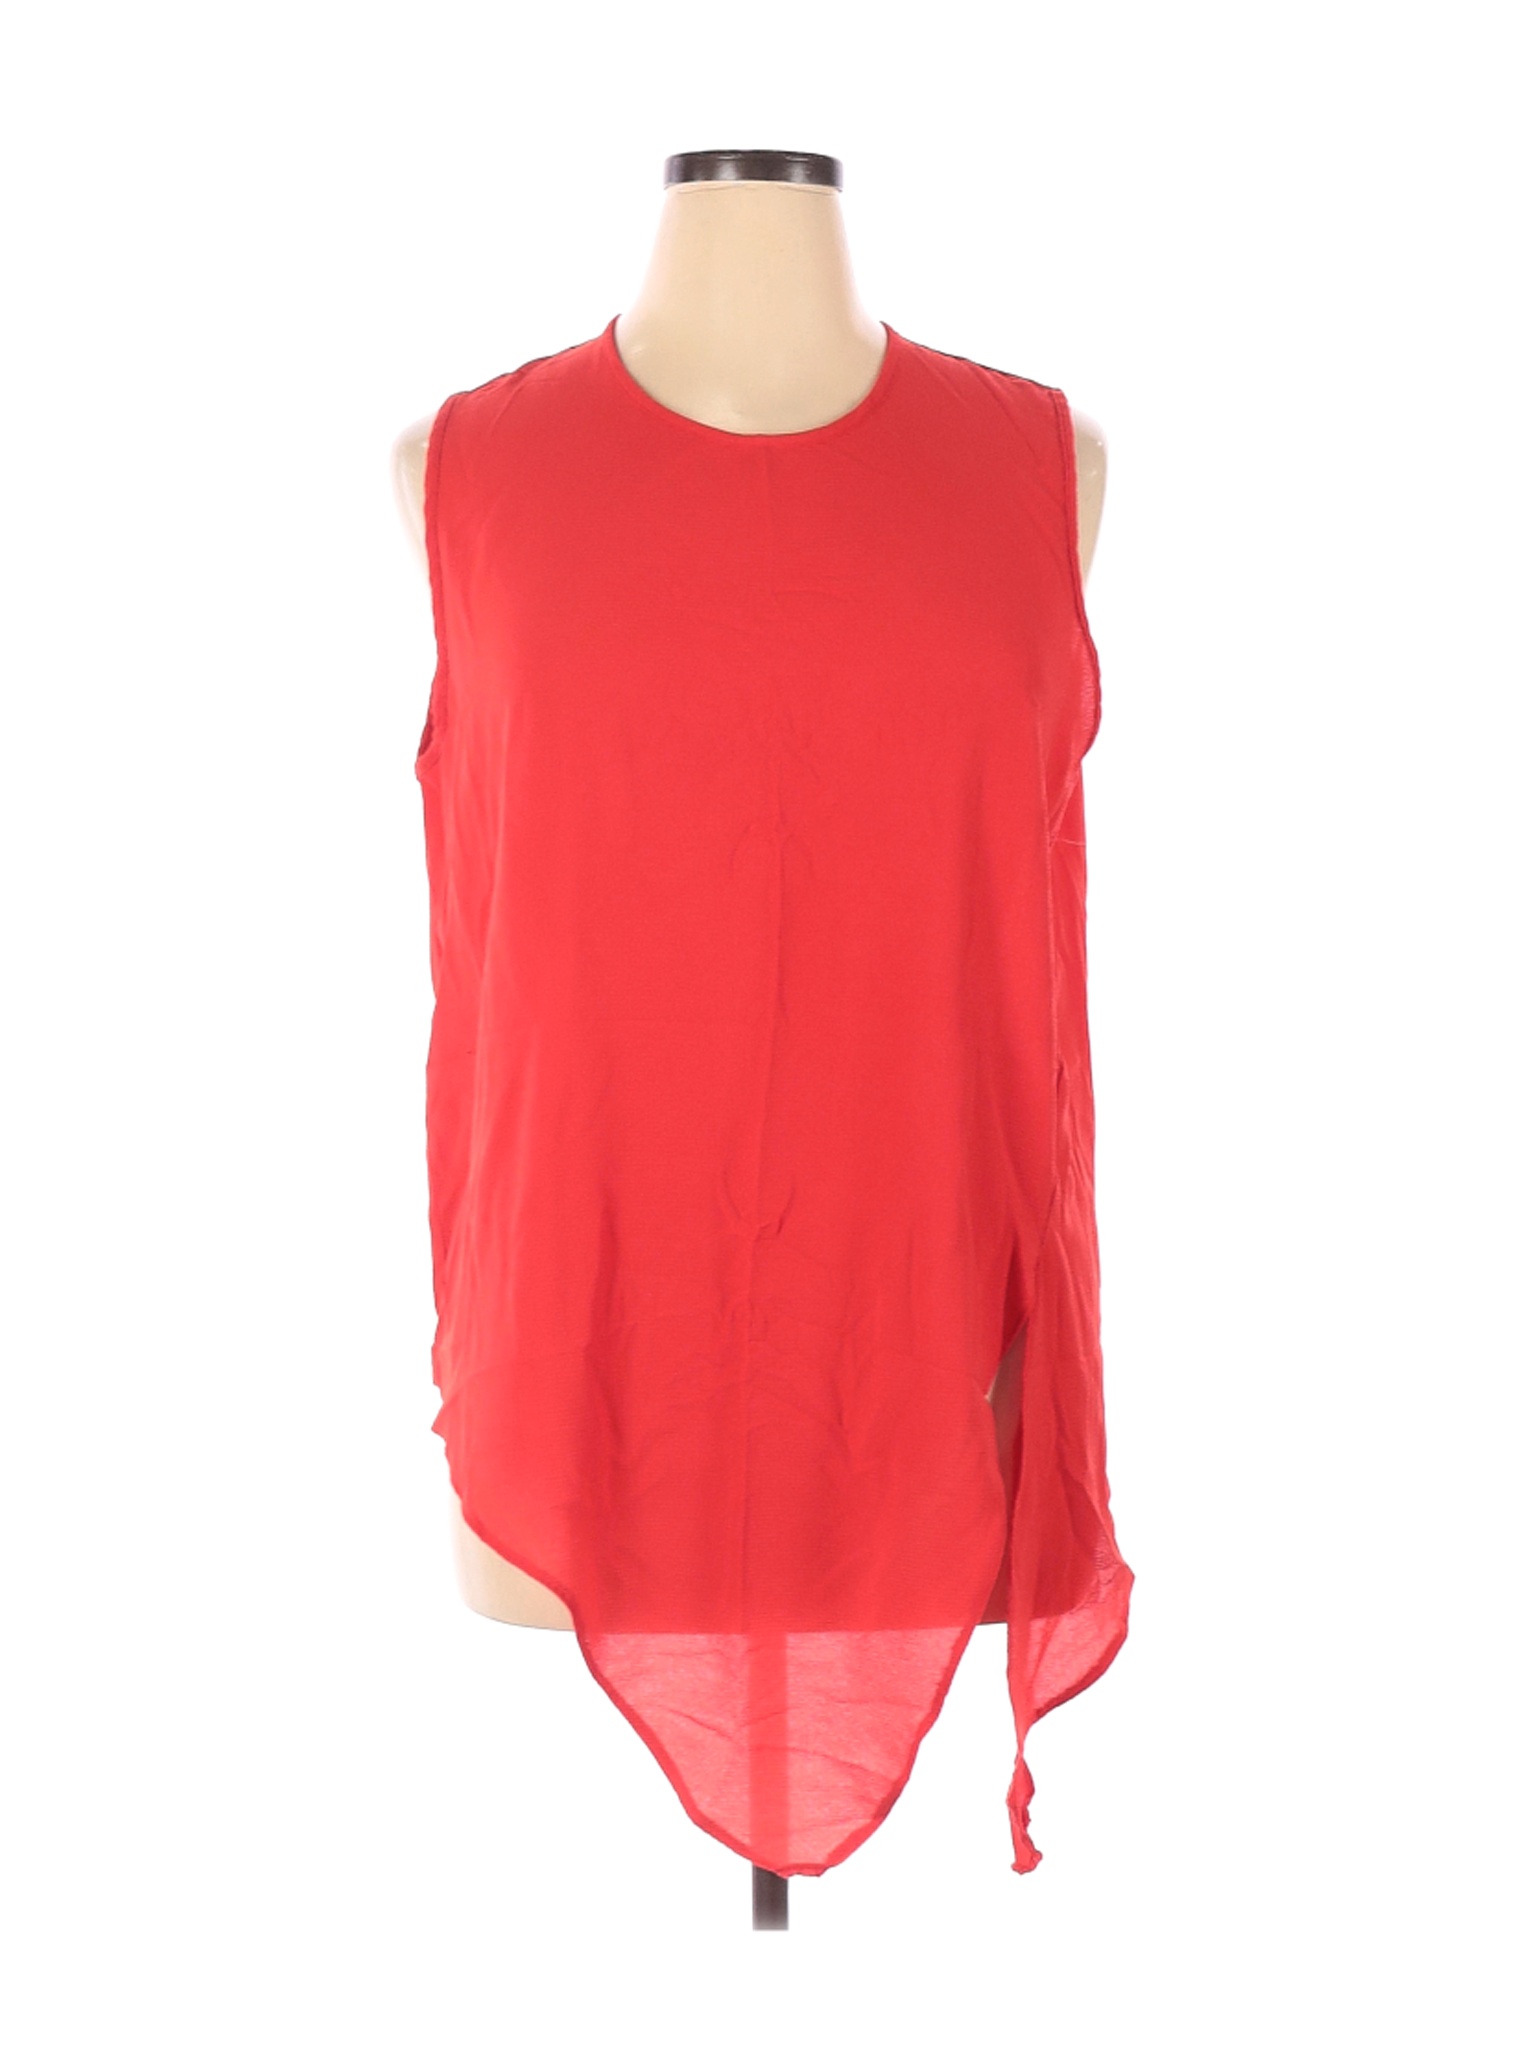 Japna Women Red Sleeveless Blouse XL | eBay